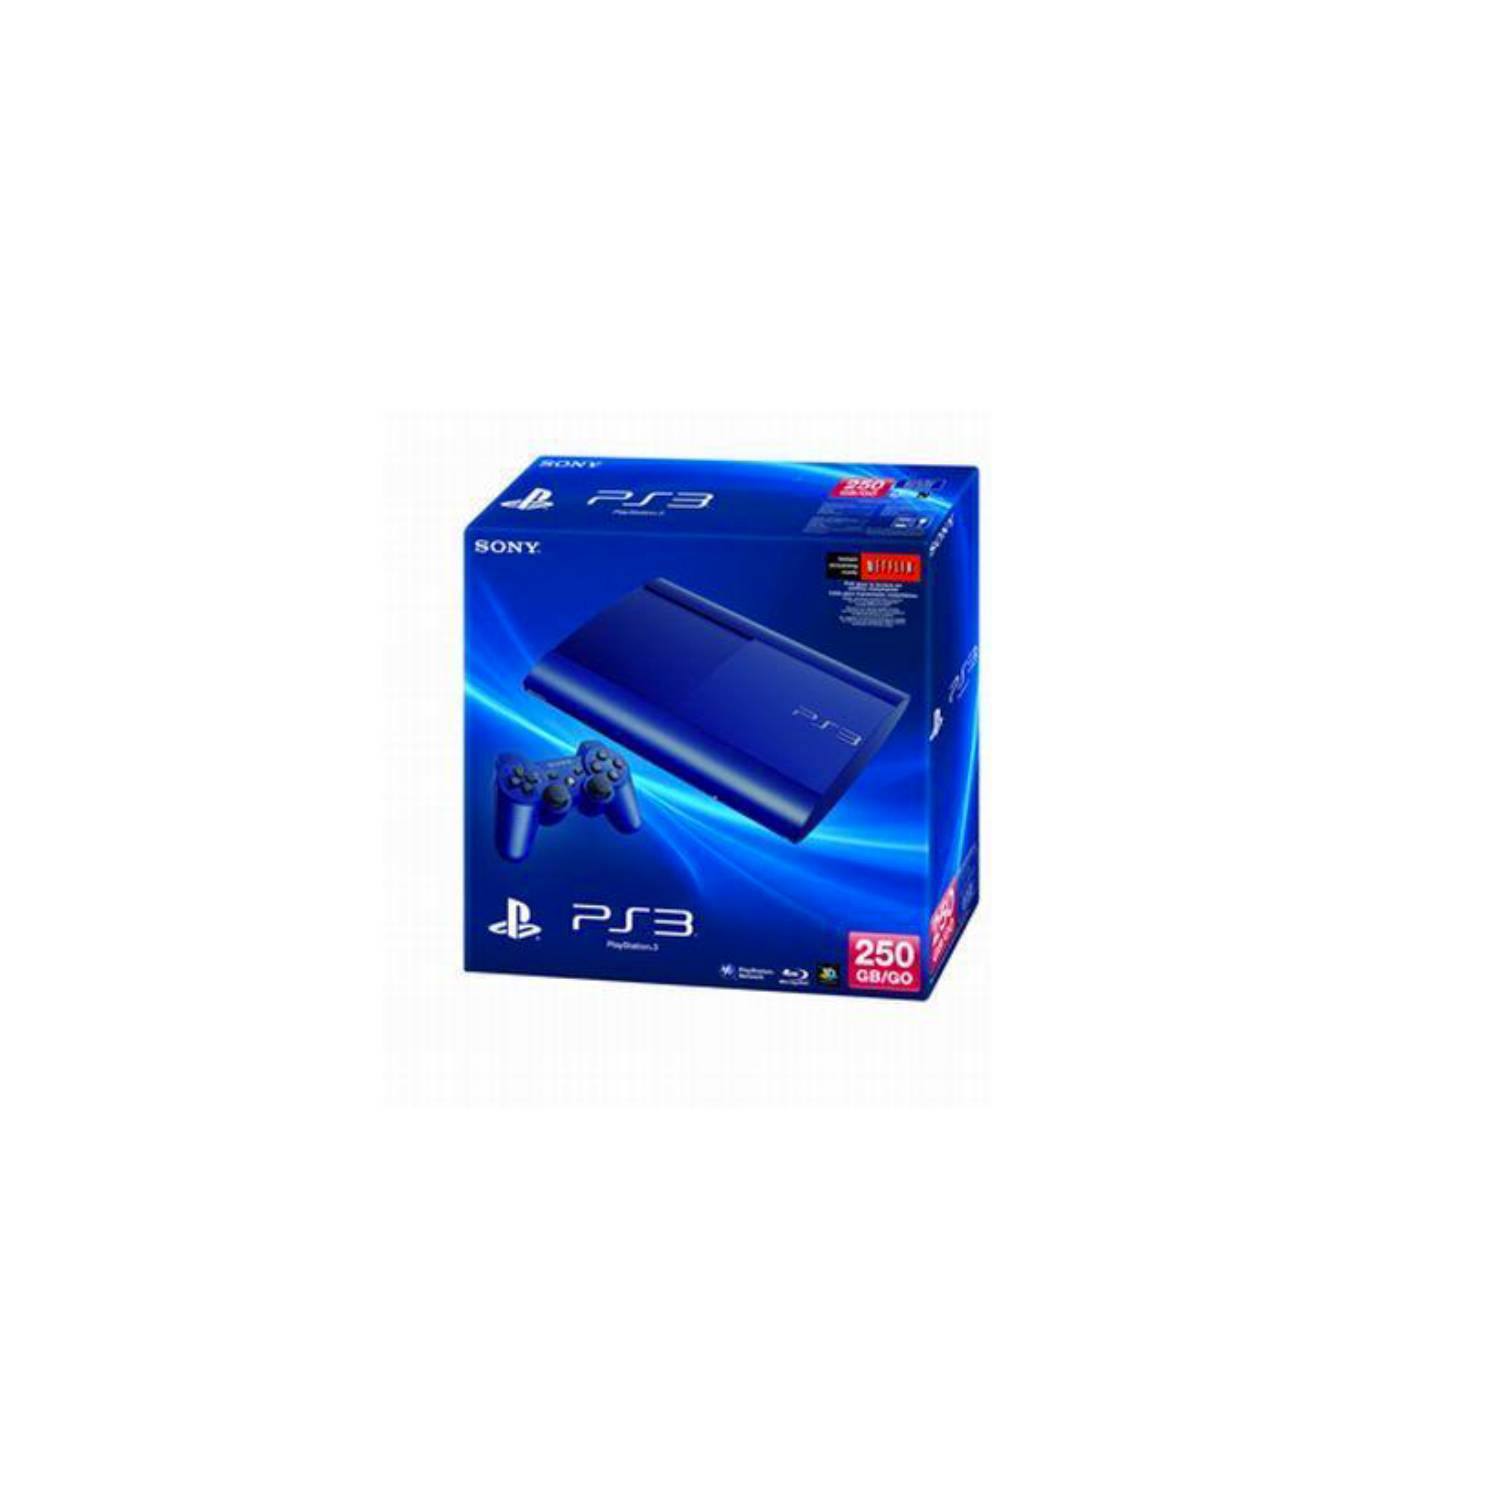 Consola Sony Playstation 3 250gb - Blue Azure - Sniper